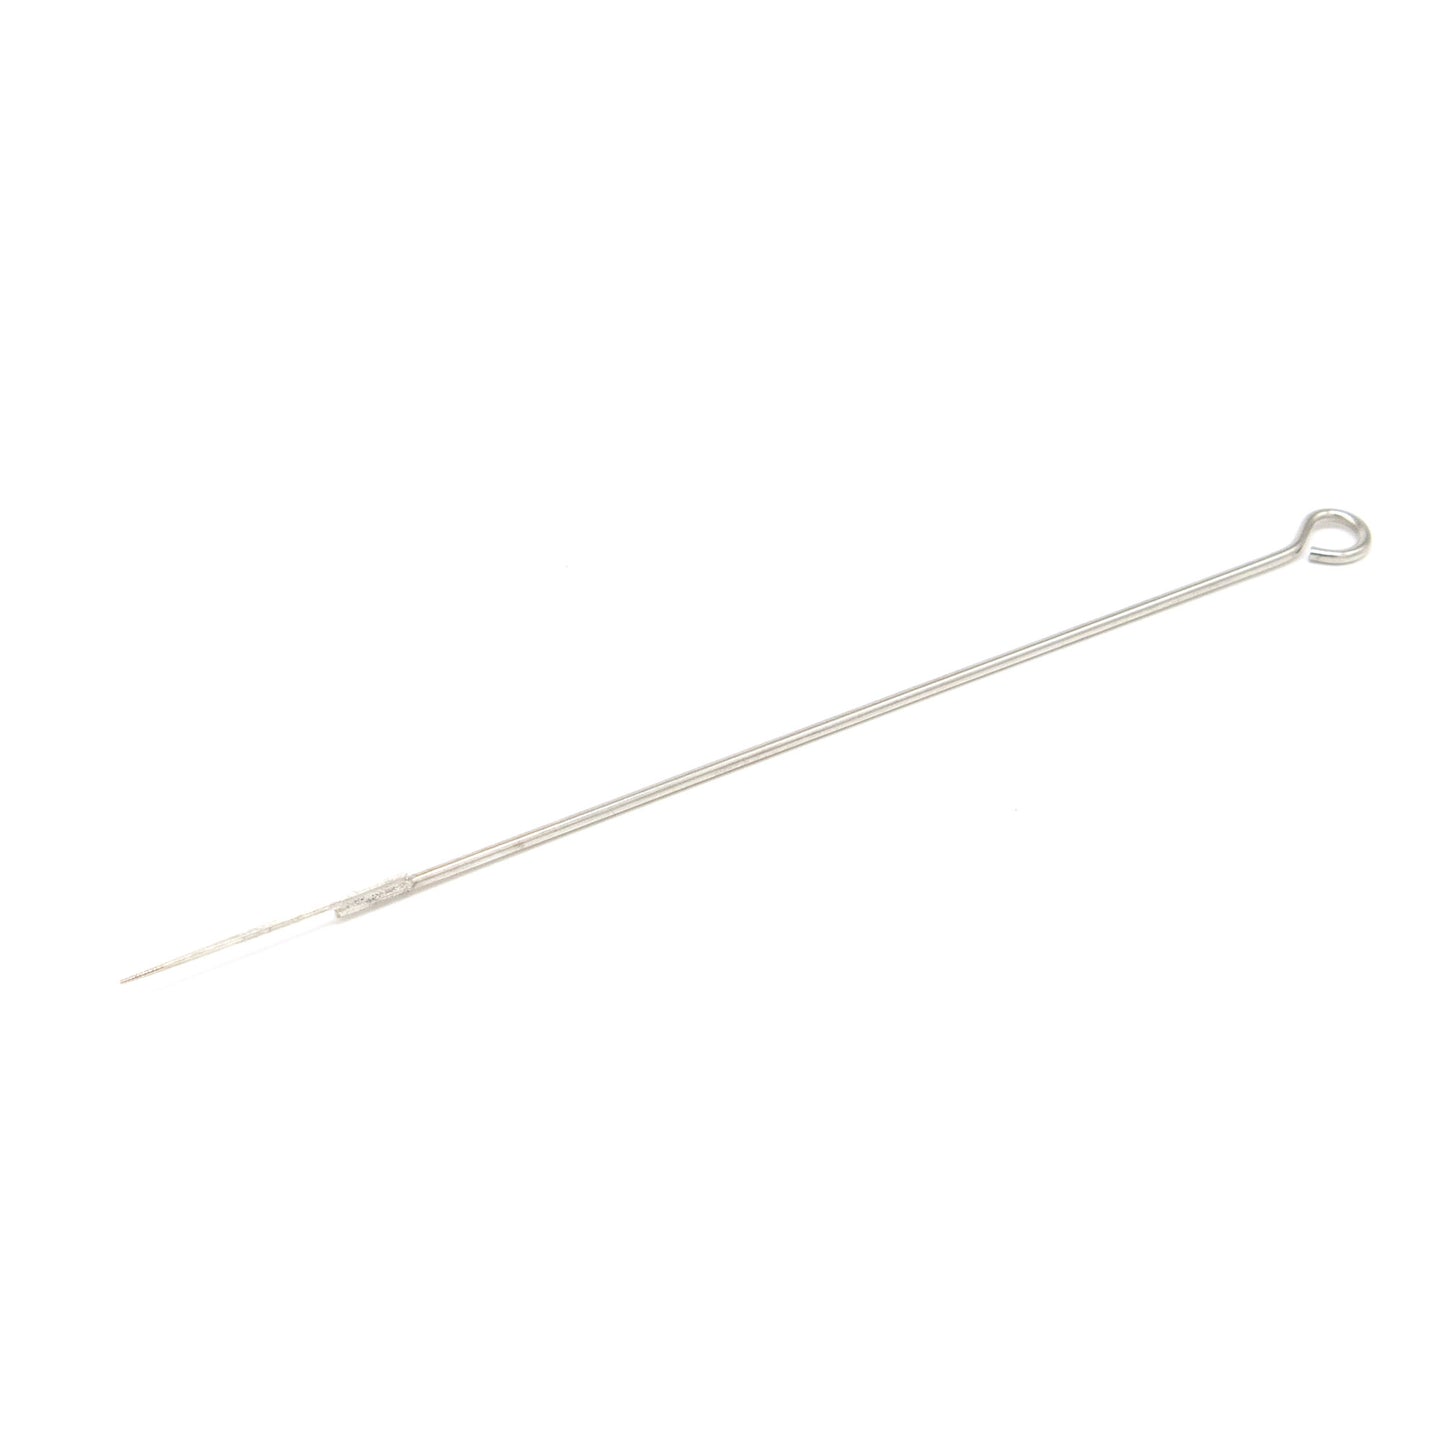 Standard  12g Liner needles